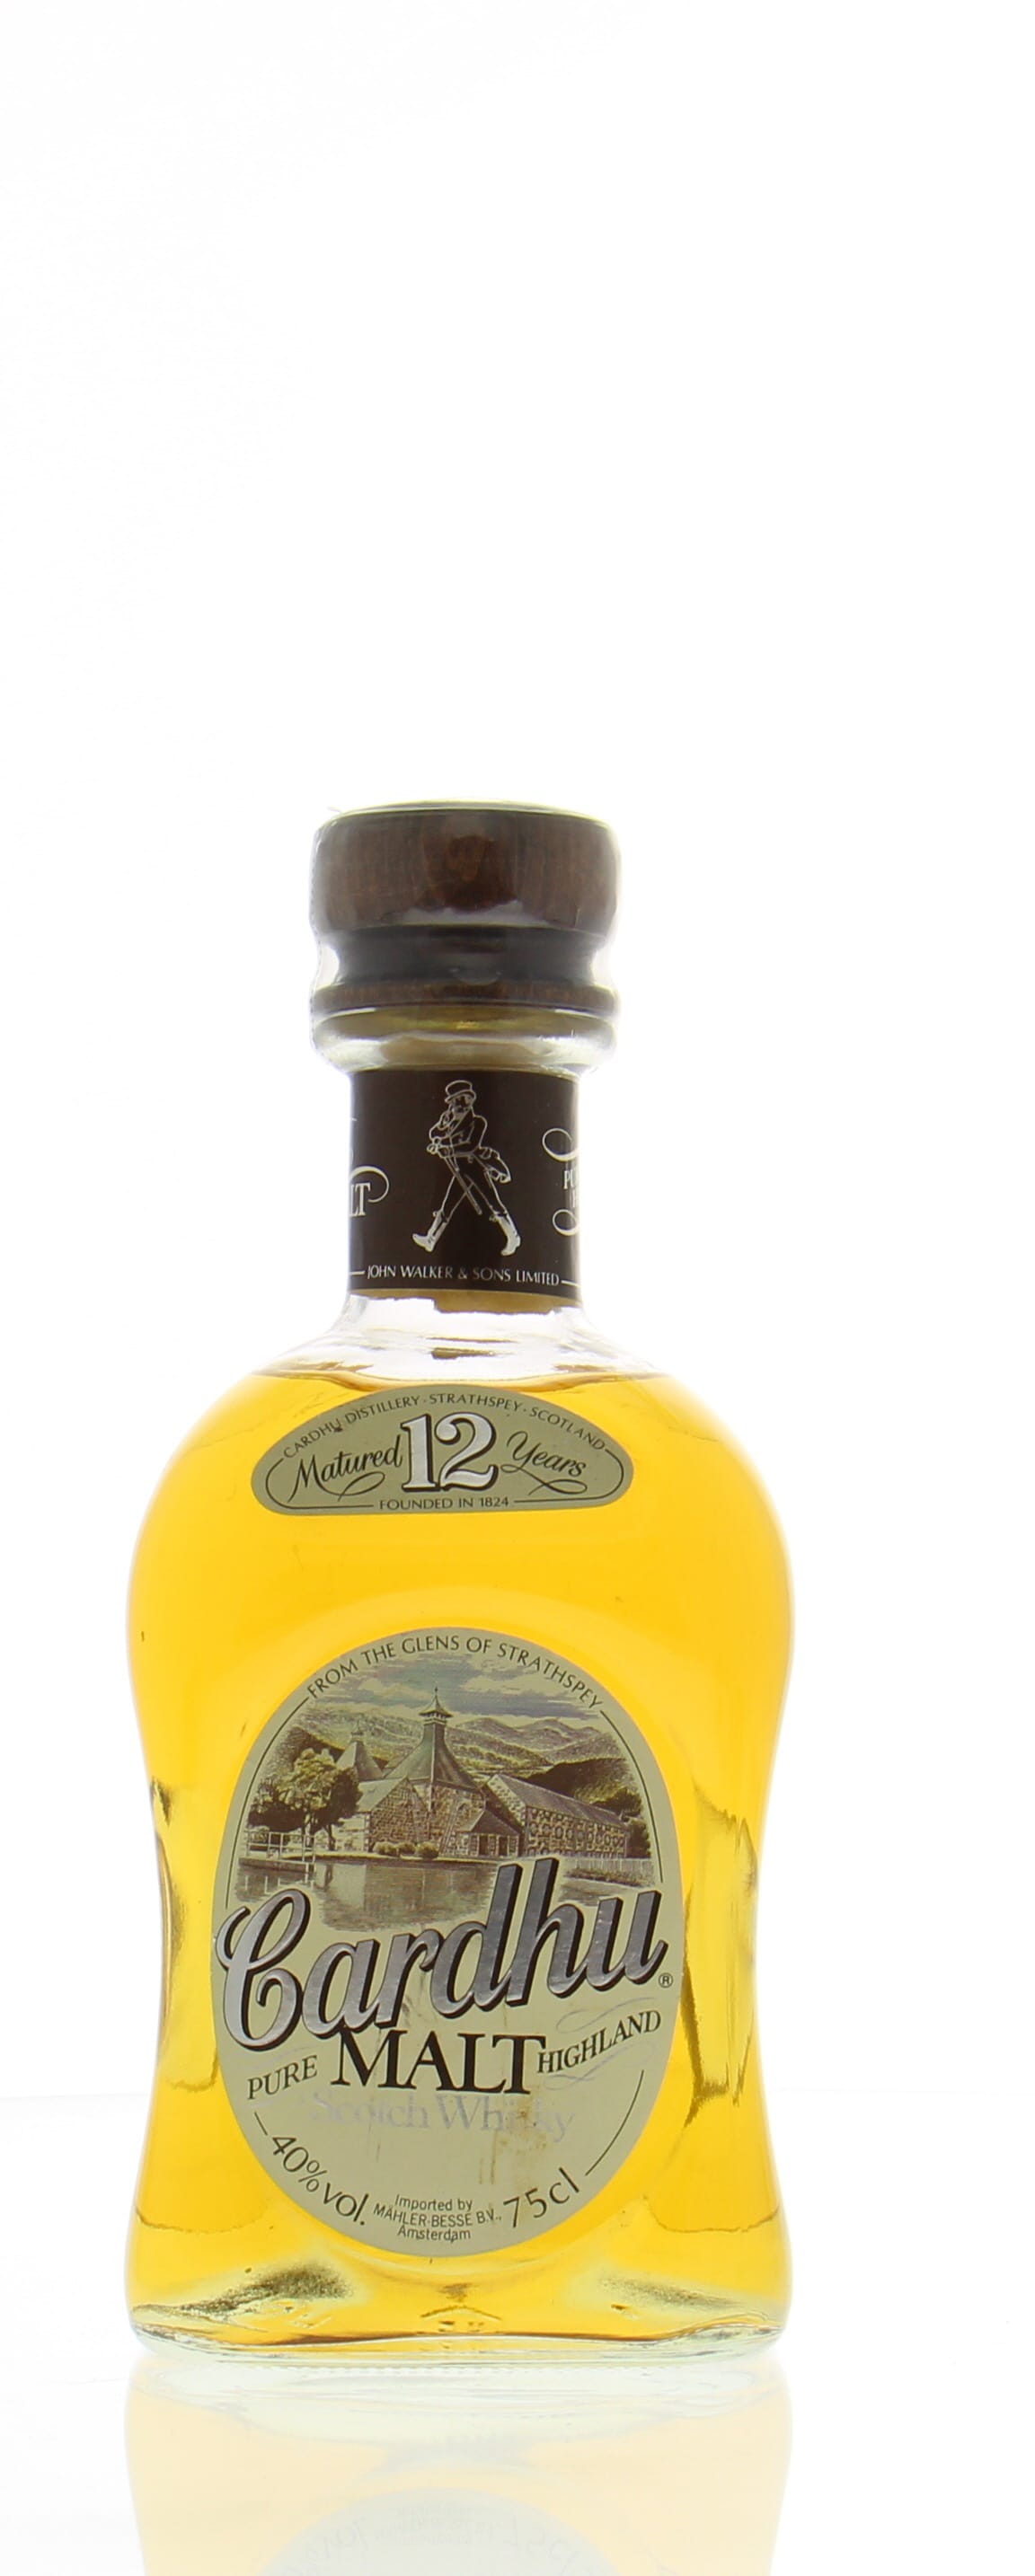 Cardhu - 12 Years Old Vinatage 1970 Pure Highland Malt Scotch Whisky Bottled for  John Walker & Sons Ltd. 40% 1970 Perfect